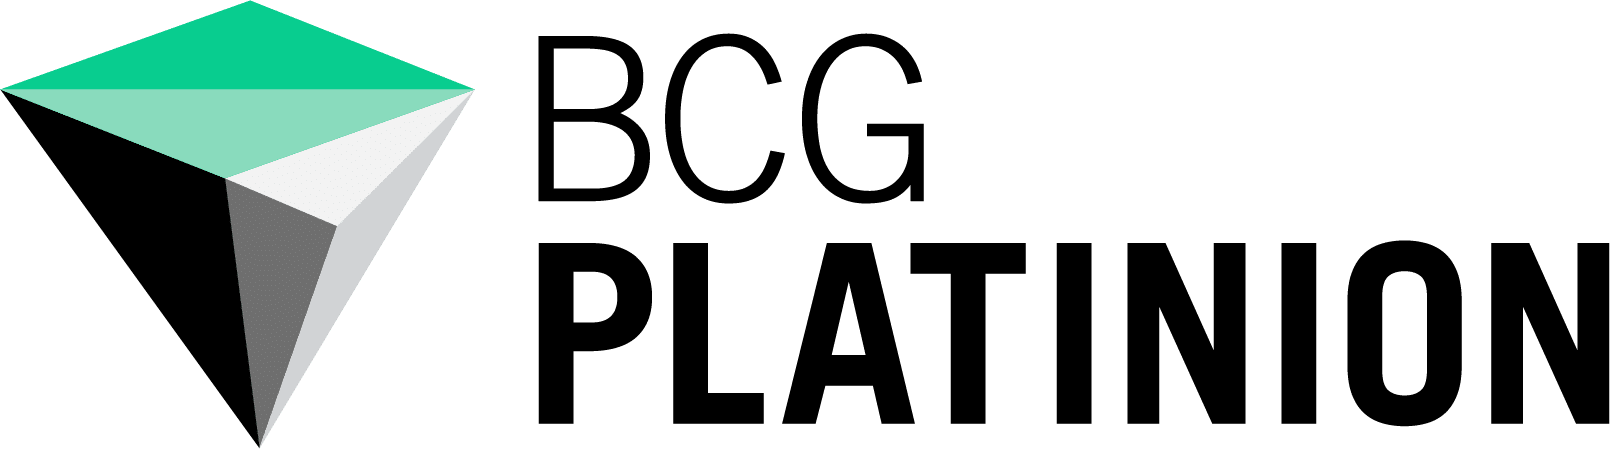 BCG Platinion Logo